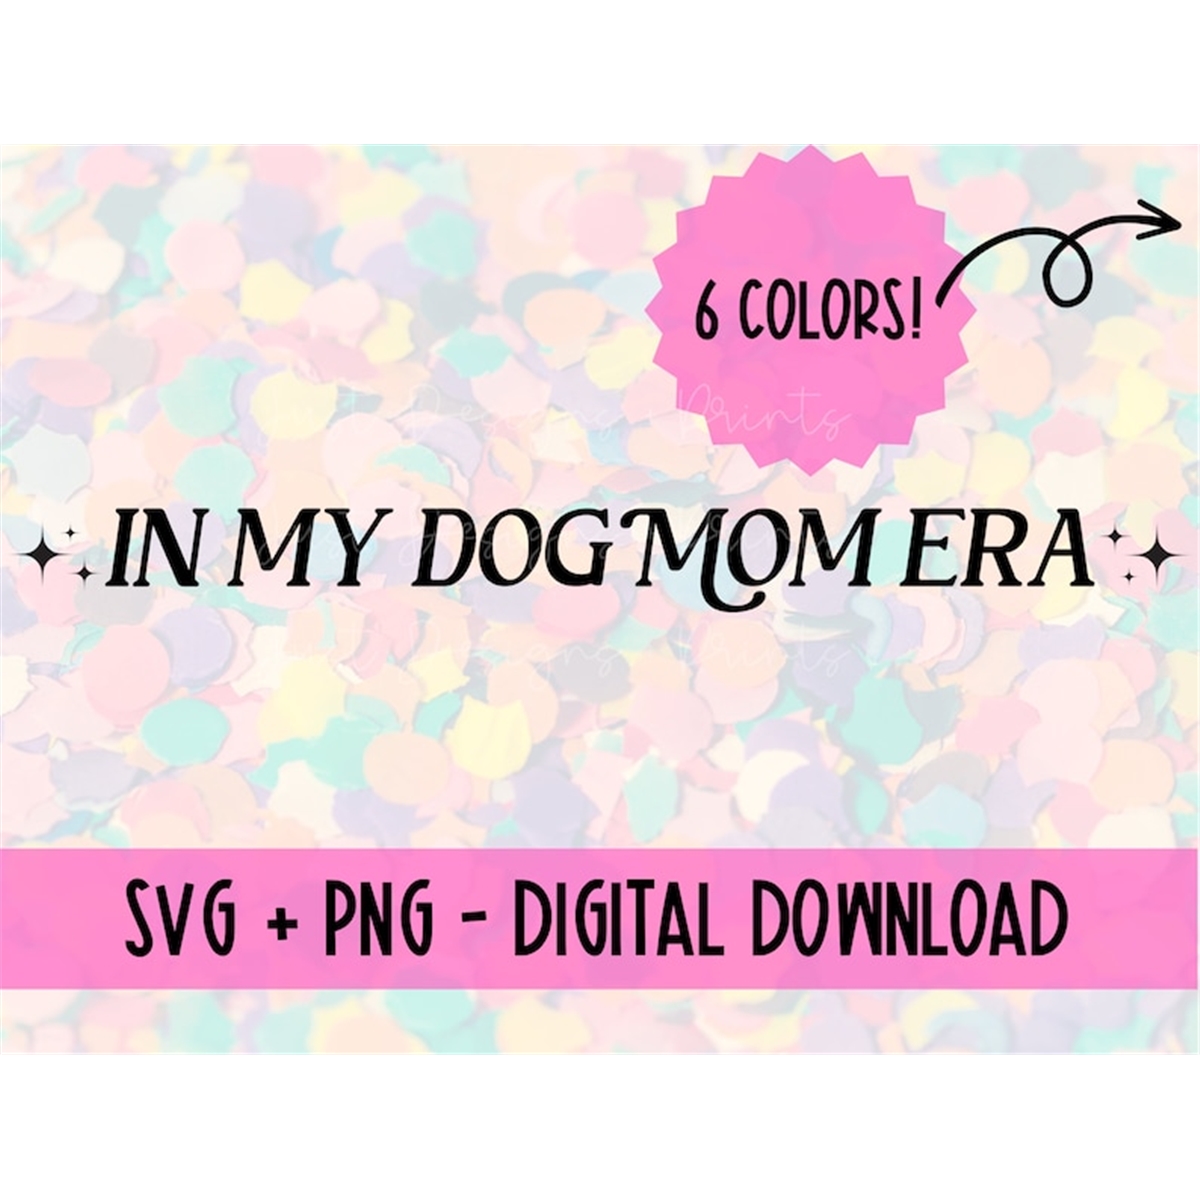 in-my-dog-mom-era-svg-in-my-dog-mom-era-png-in-my-dog-mom-image-1